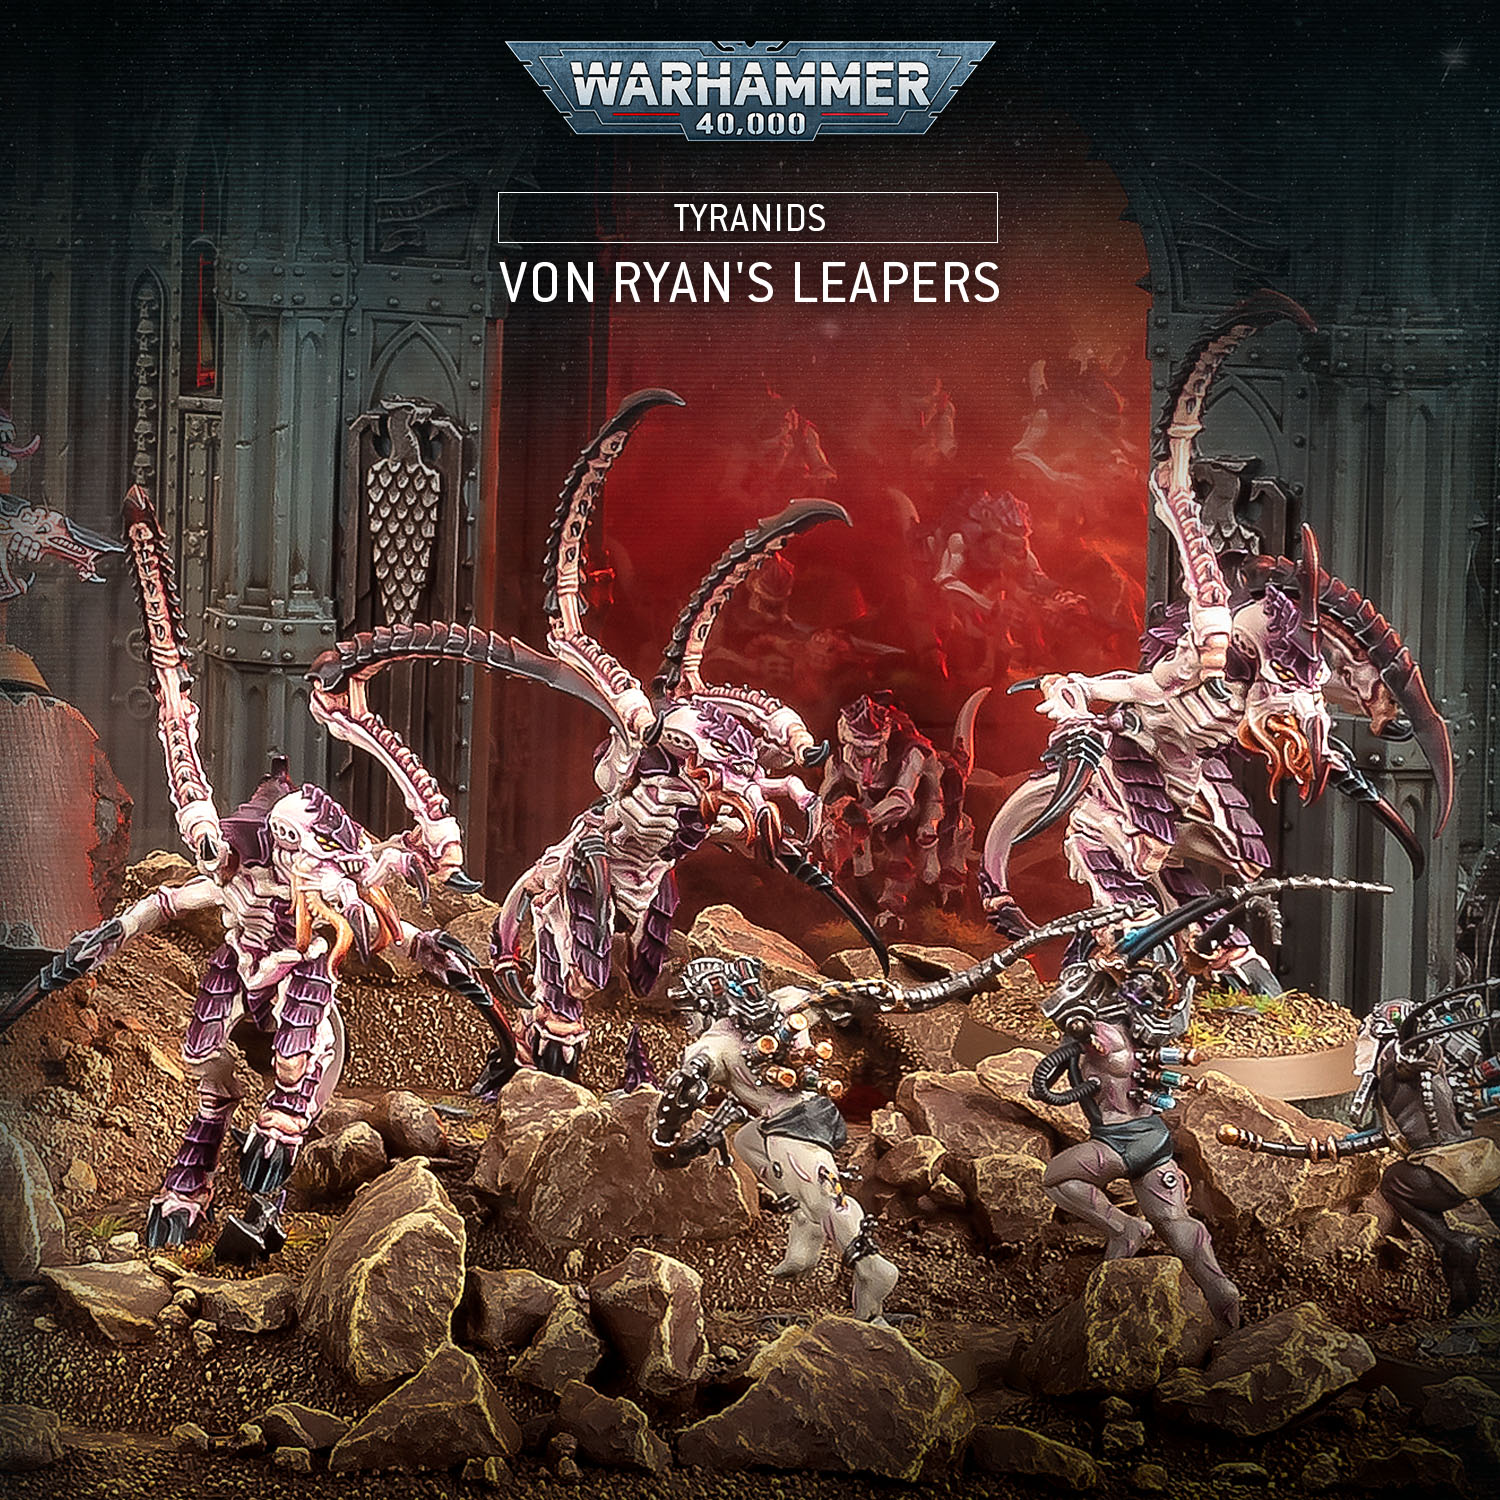 New Tyranid model - Von Ryan's Leaper! : r/Warhammer40k